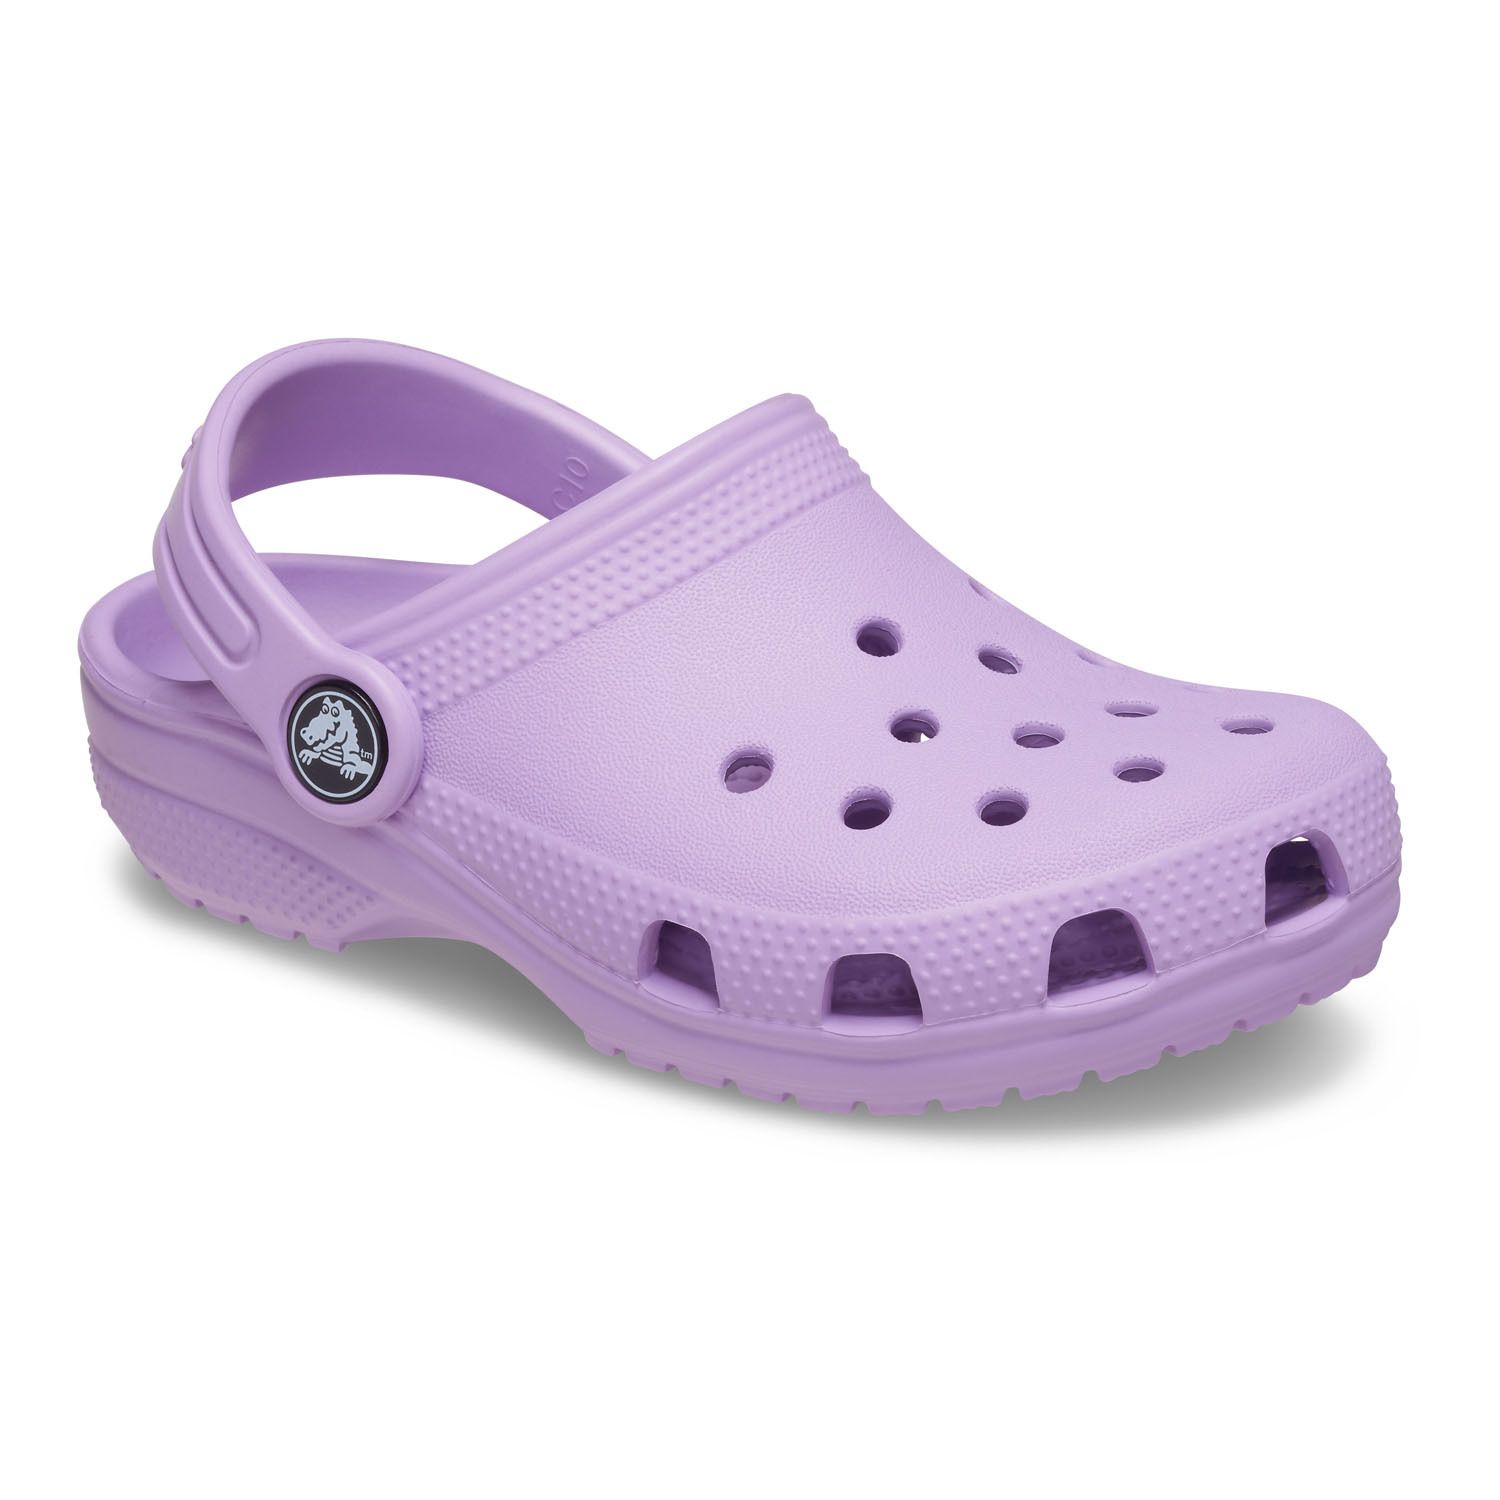 purple crocs size 7